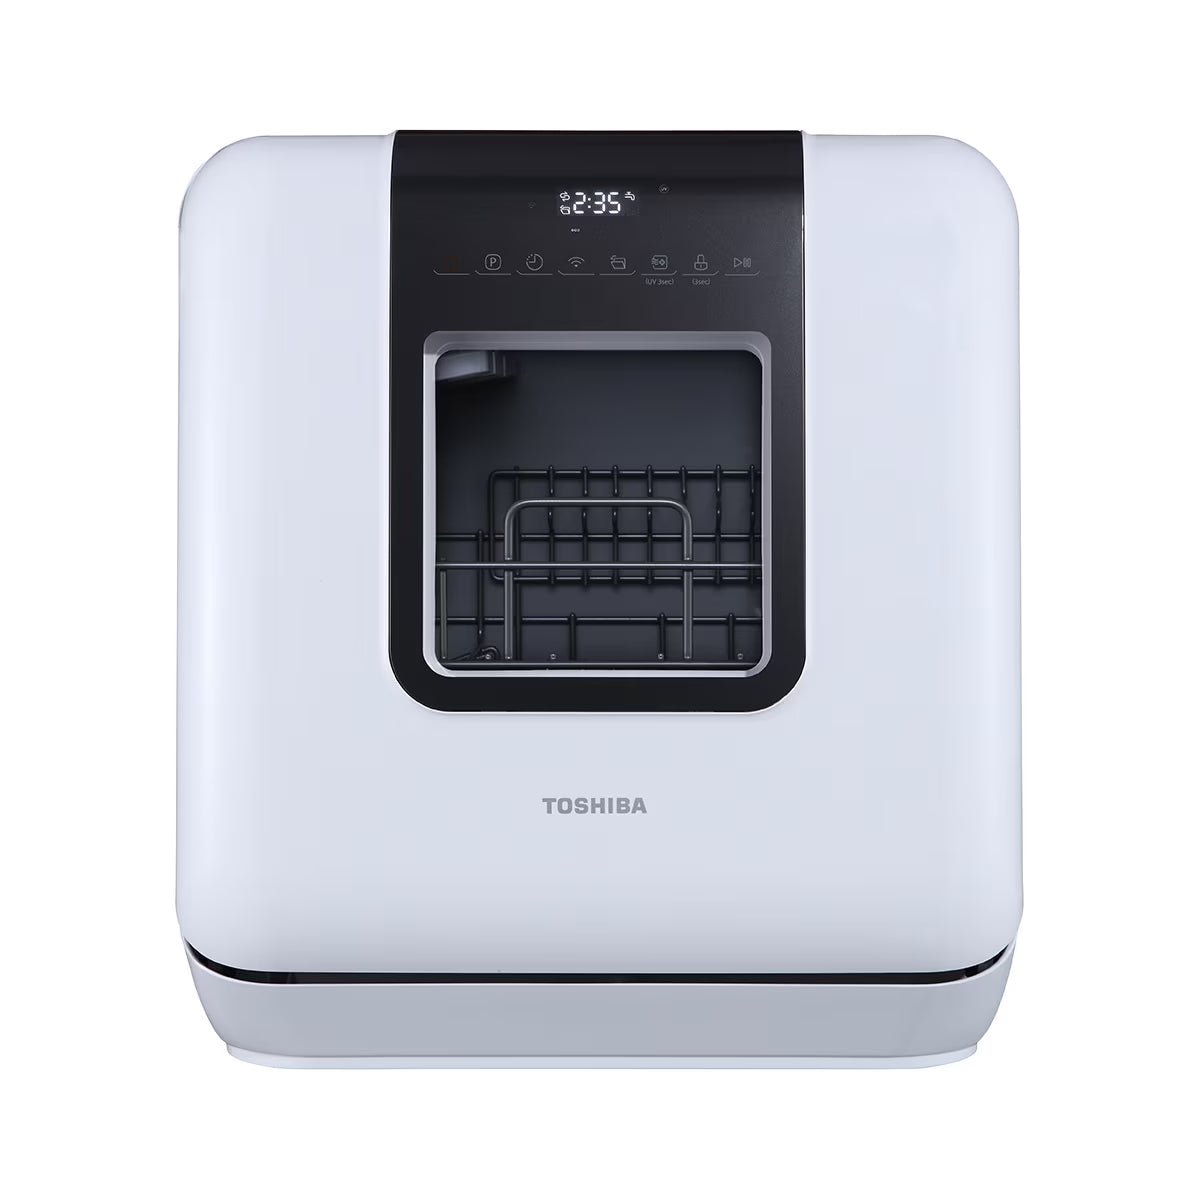 Toshiba 東芝 DWS - 34AHK 獨立式免安裝洗碗碟機 - Fever Electrics 電器熱網購平台